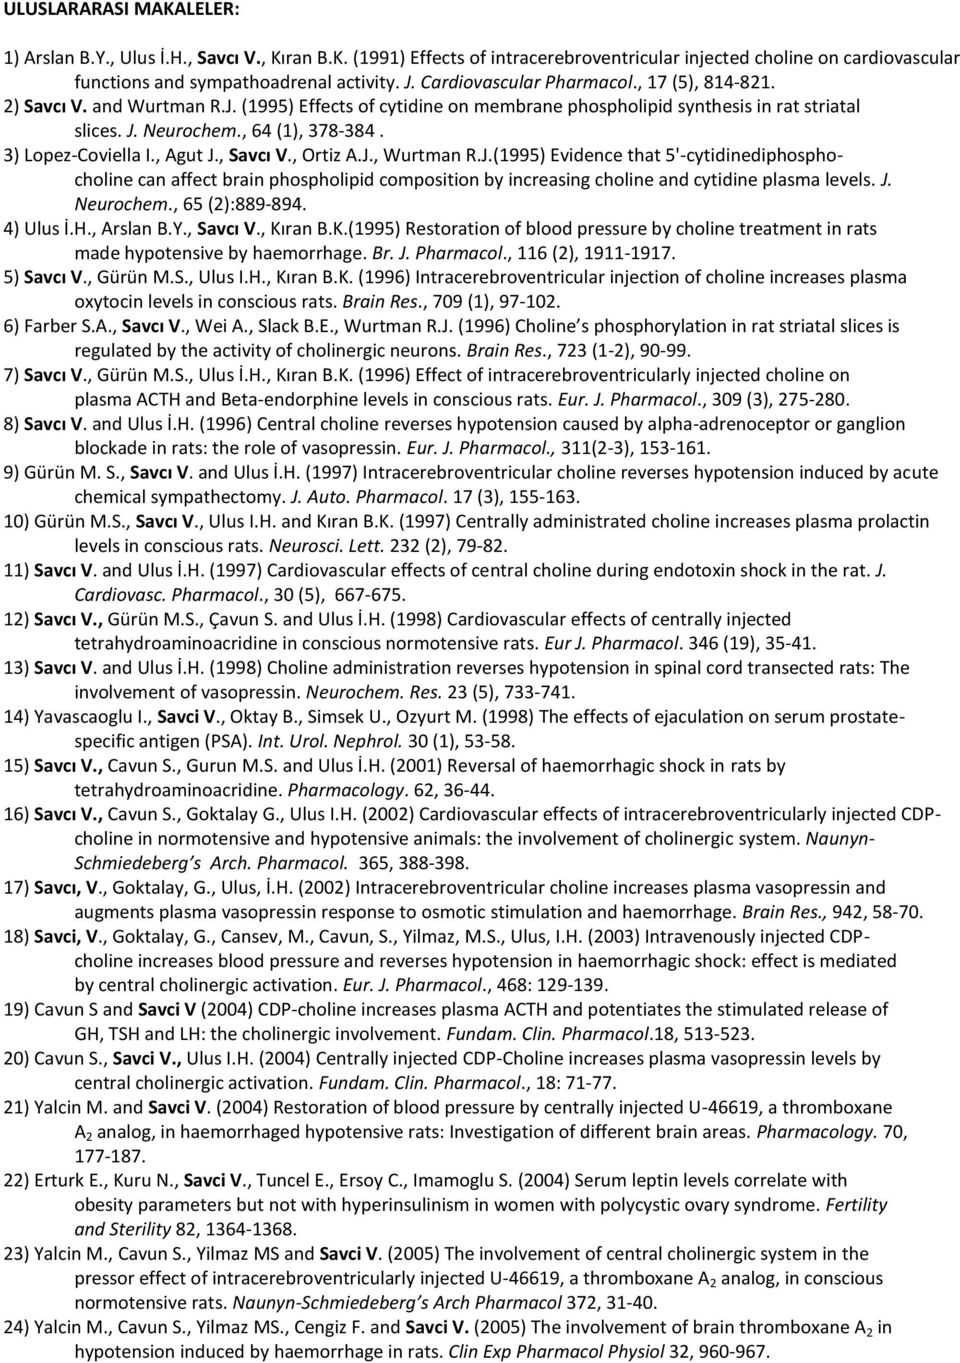 3) Lopez-Coviella I., Agut J., Savcı V., Ortiz A.J., Wurtman R.J.(1995) Evidence that 5'-cytidinediphosphocholine can affect brain phospholipid composition by increasing choline and cytidine plasma levels.